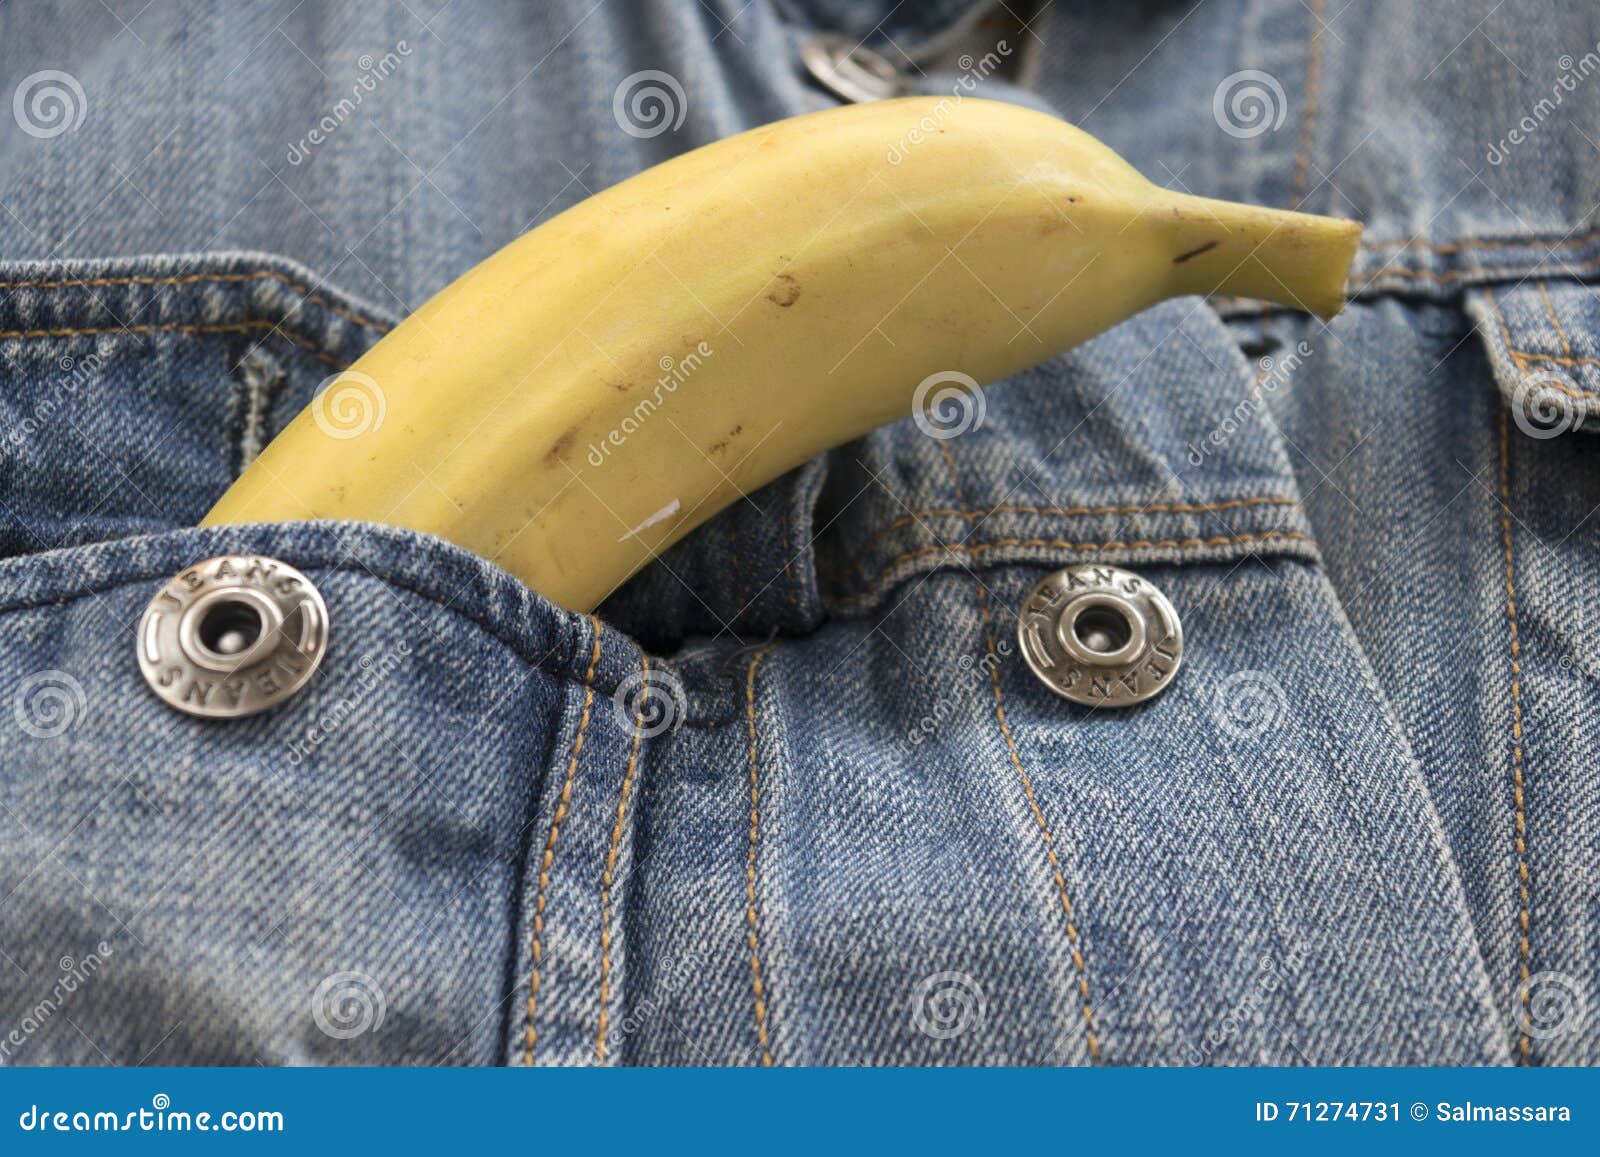 Banana Republic Jean Jacket | Banana republic jeans, Jackets, Clothes design